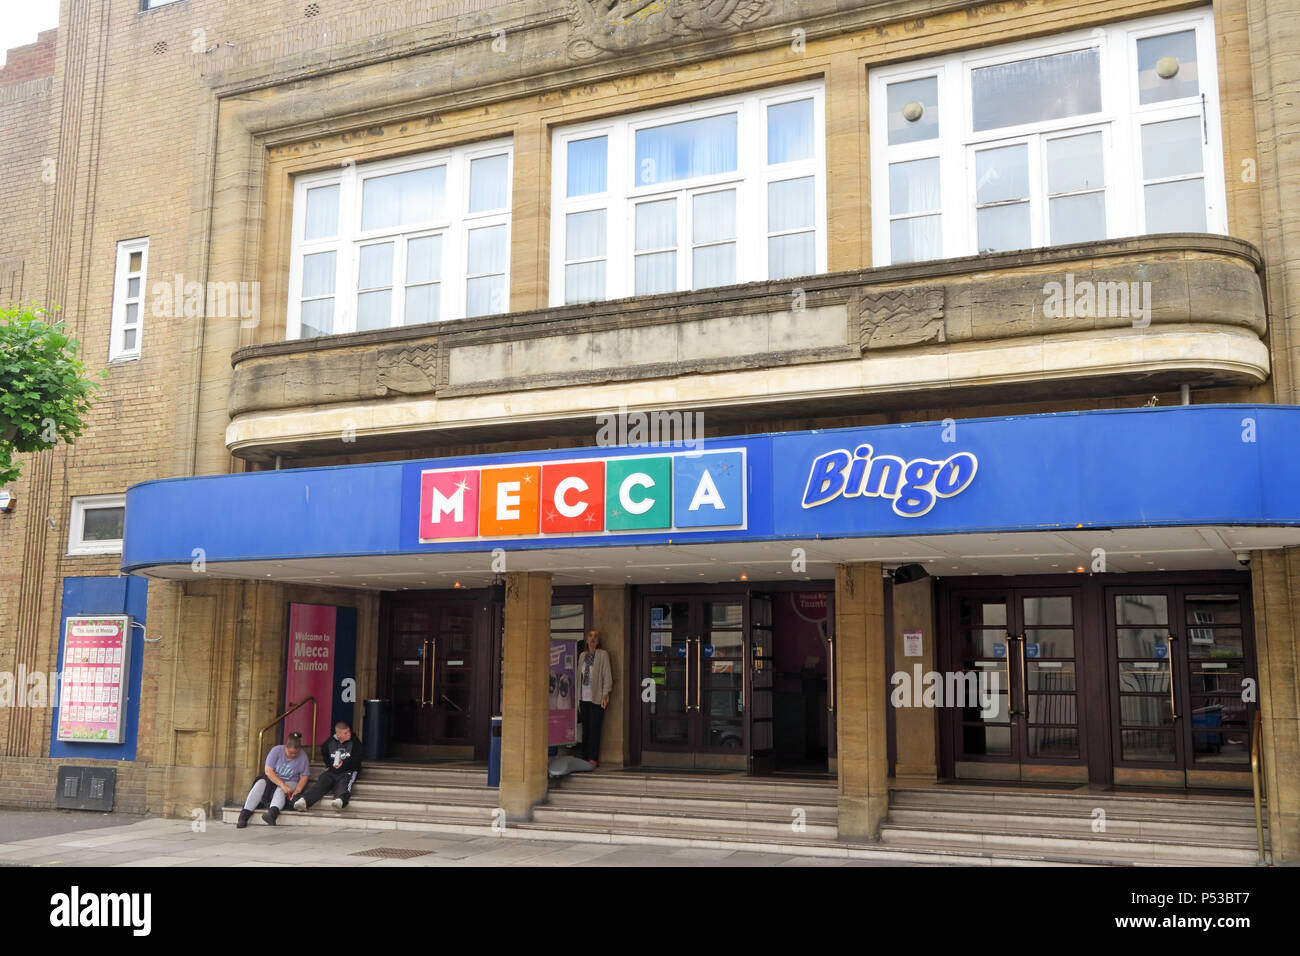 Mecca Bingo Taunton, Corporation Street, Taunton, Somerset, England, UK, TA1 4AH Banque D'Images